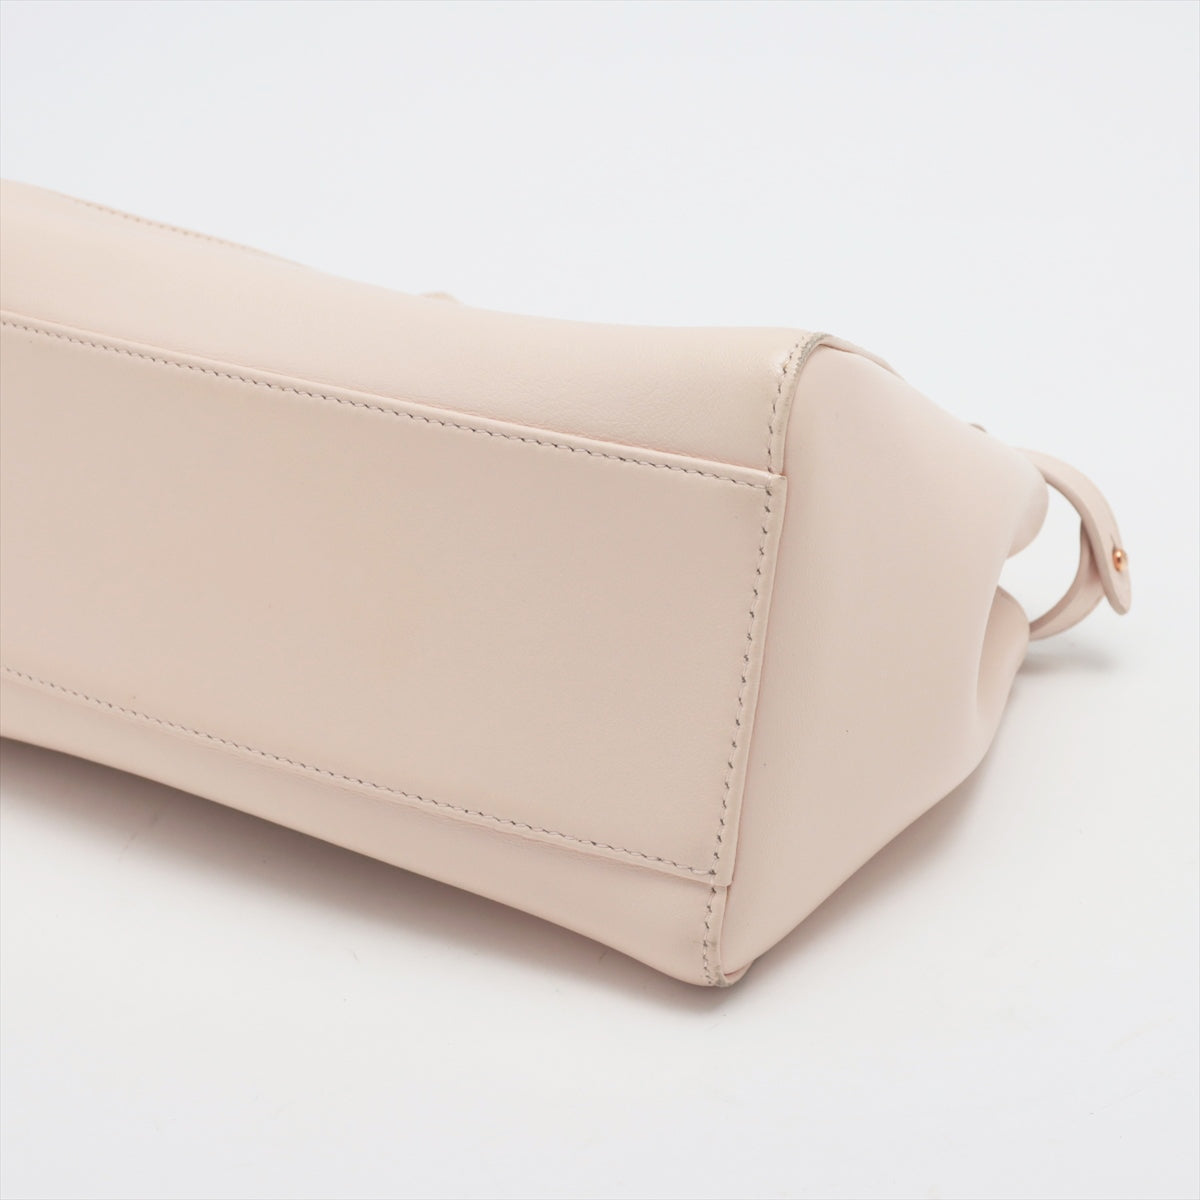 Fendi Mini Peek-a-boo Leather 2way handbag Pink 8BN244